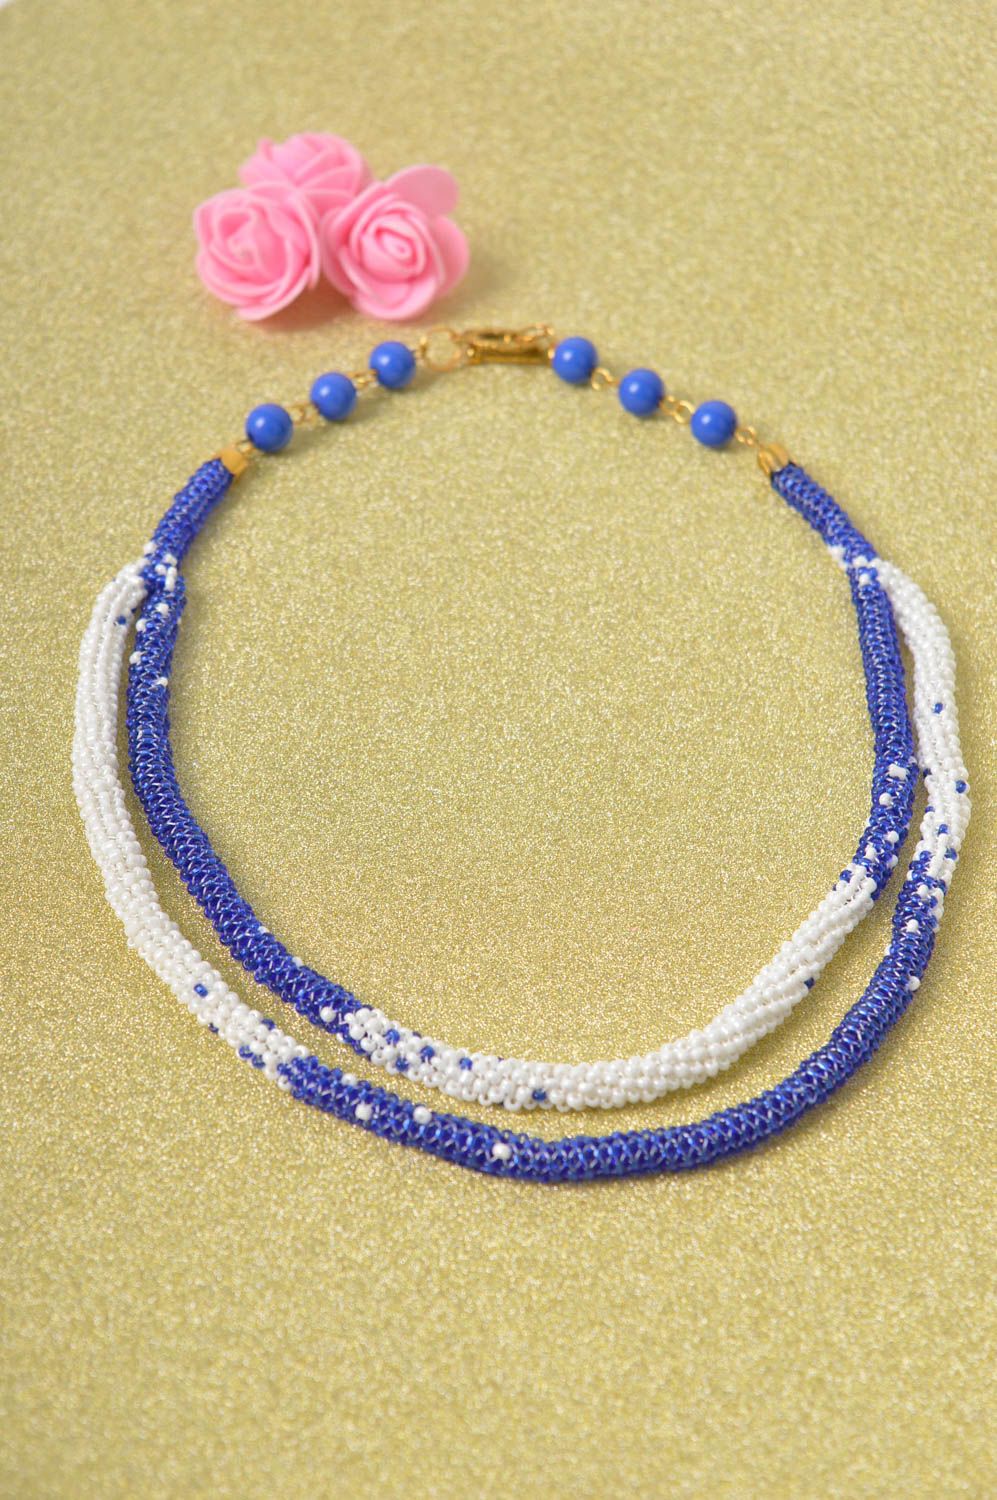 Gentle handmade beaded necklace artisan jewelry designs bead weaving ideas photo 1